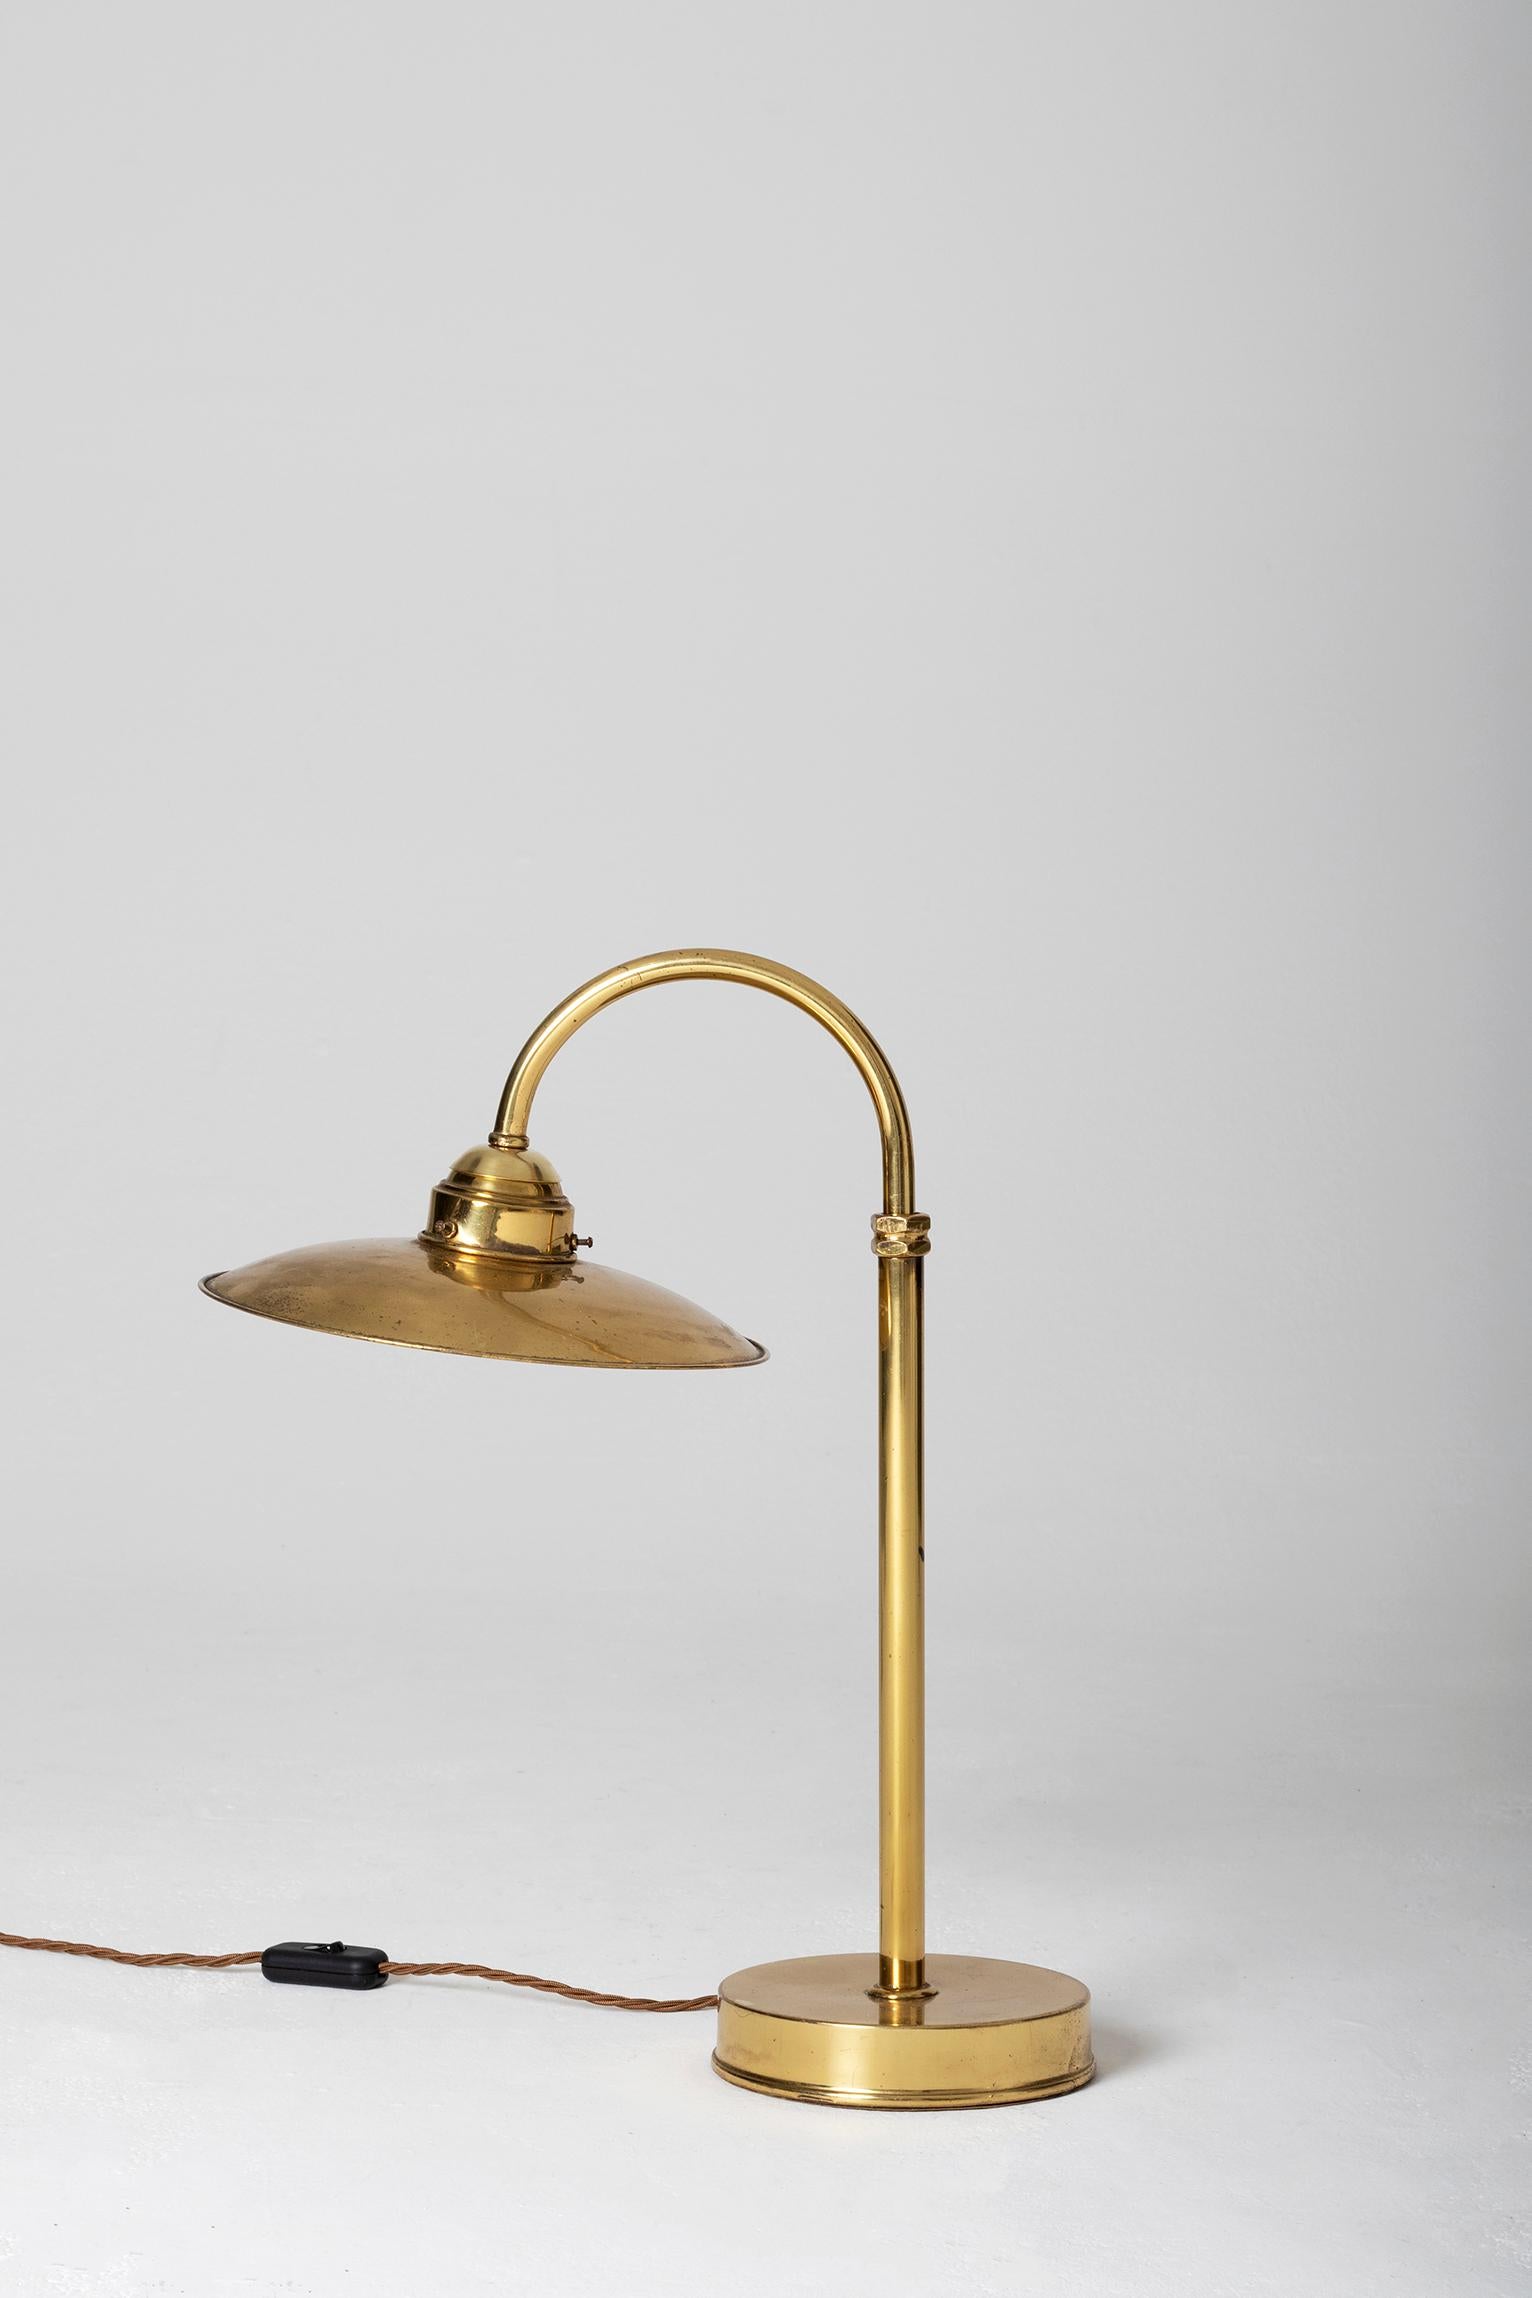 French Midcentury Brass Desk Lamp